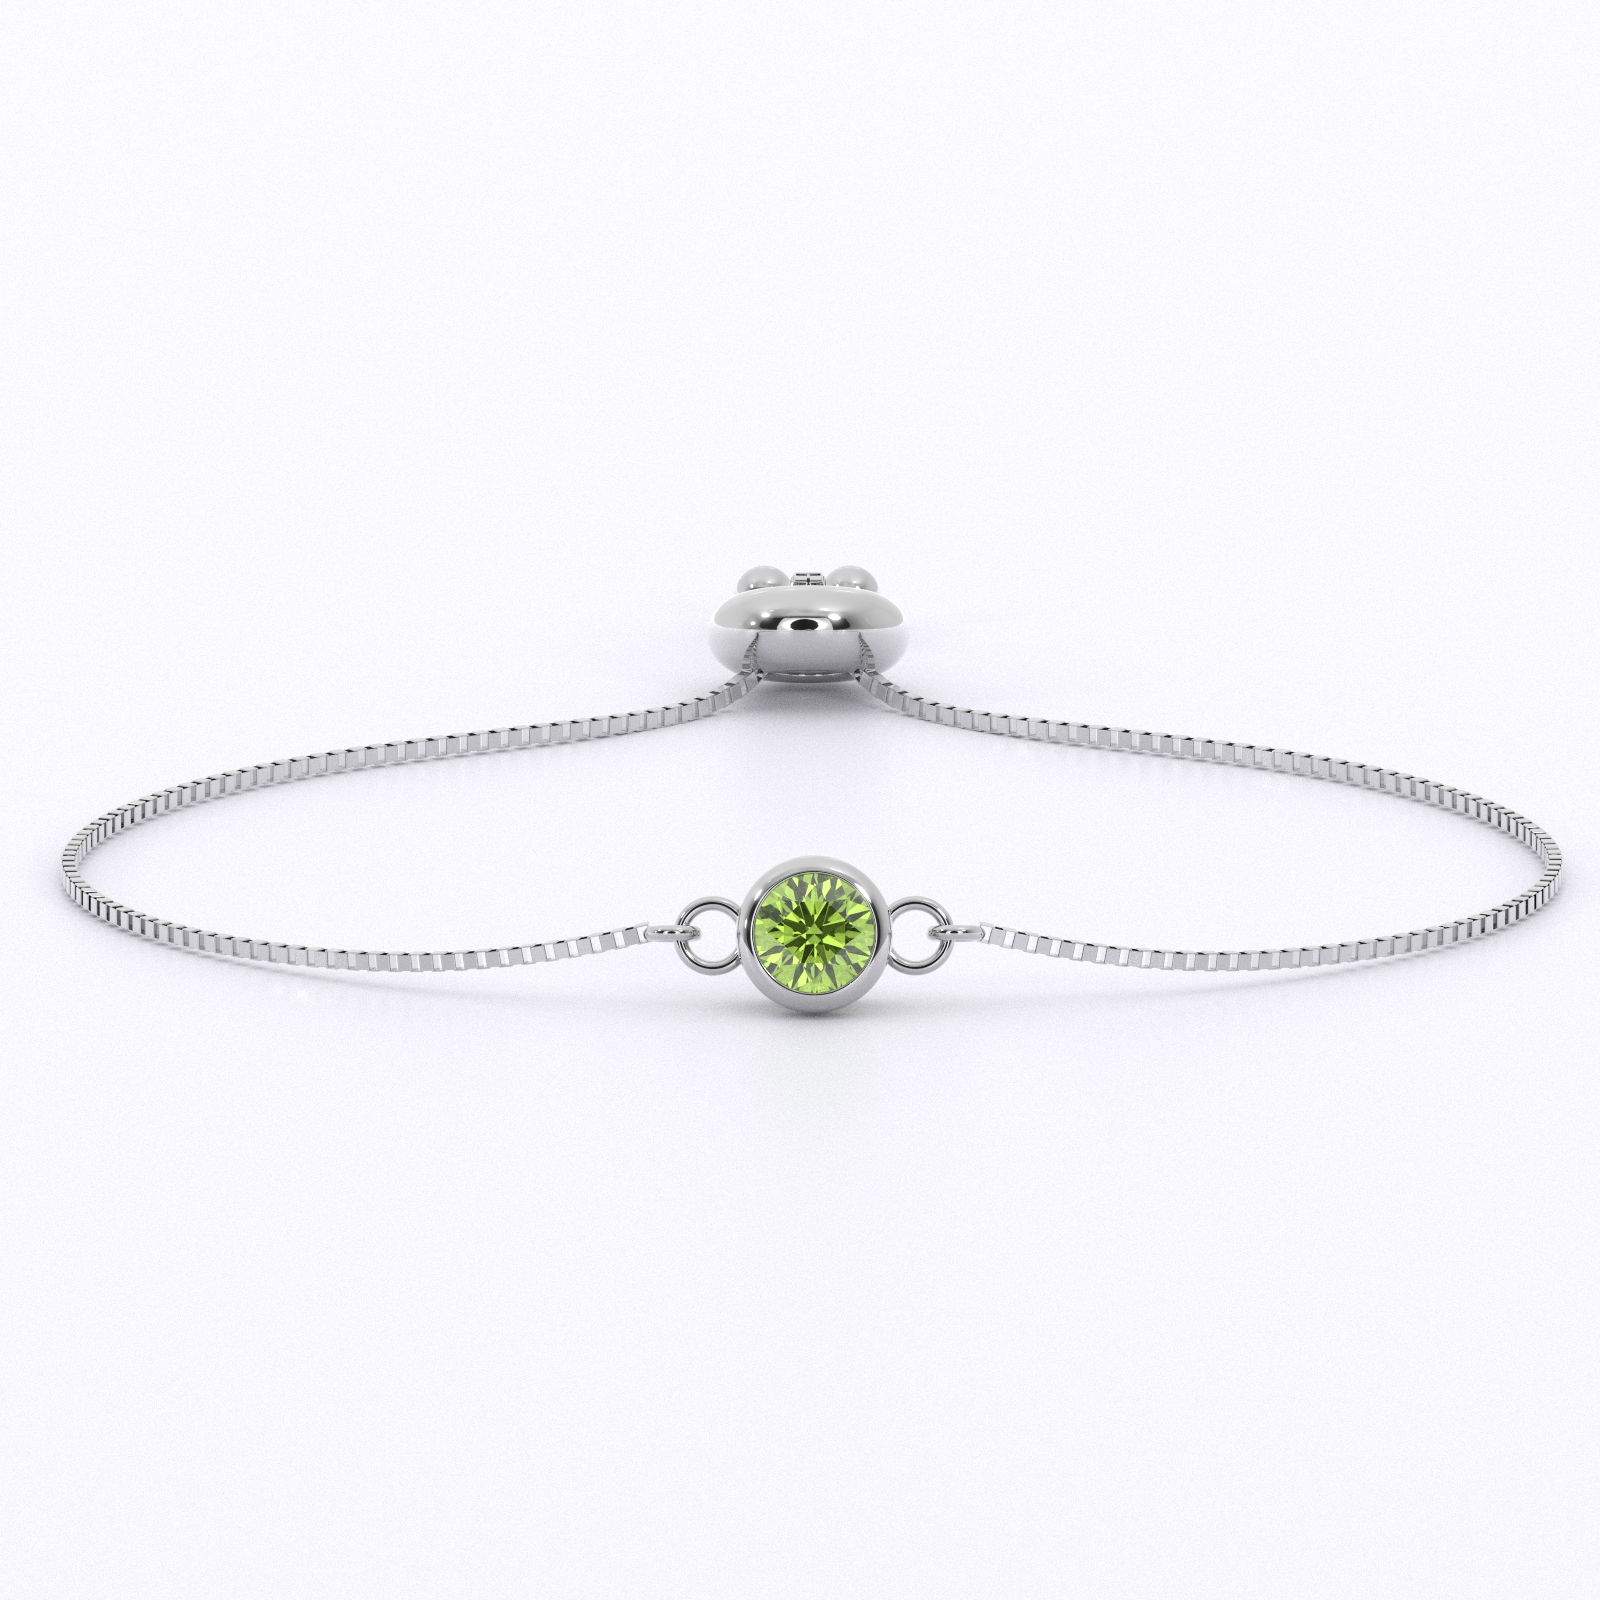 Unisex Gemstone Green Peridot Crystal Bracelet For Jewelry Size 7 Inch  Diameter